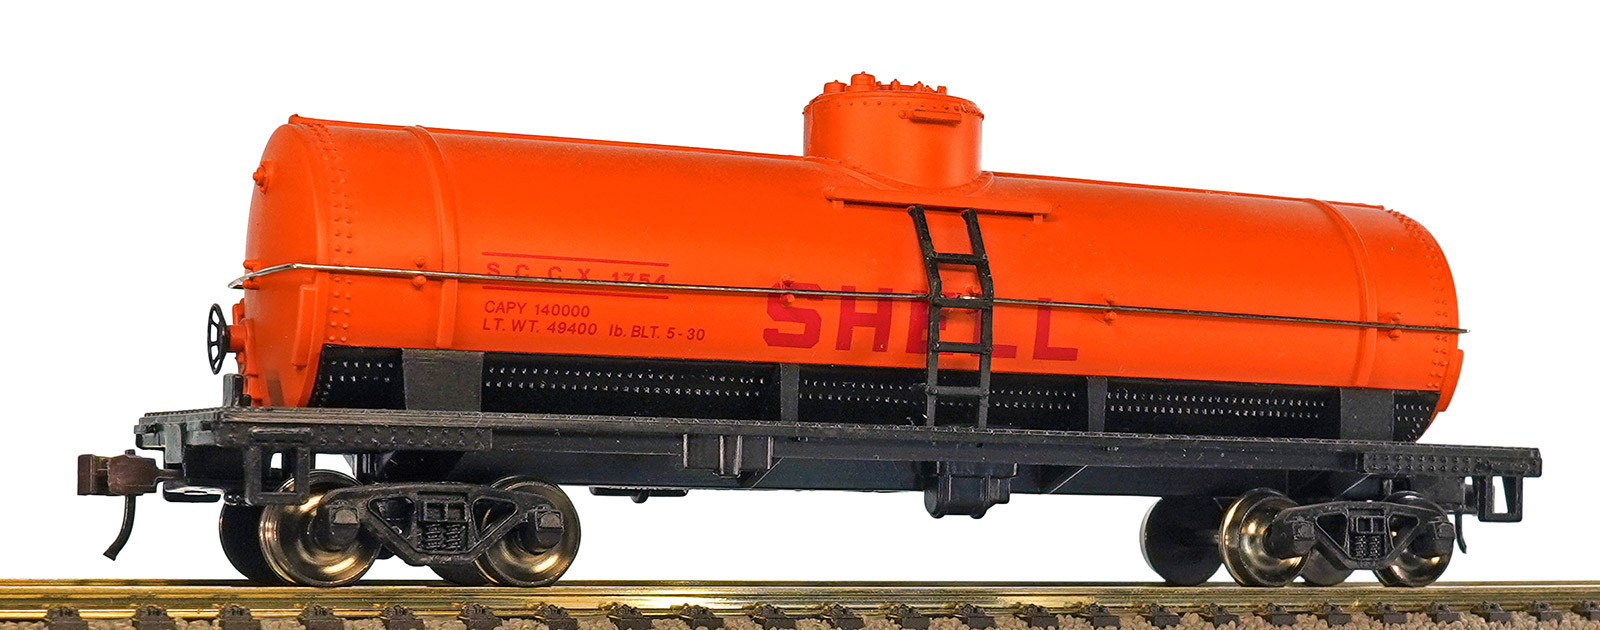 модель TRAIN 20290-17